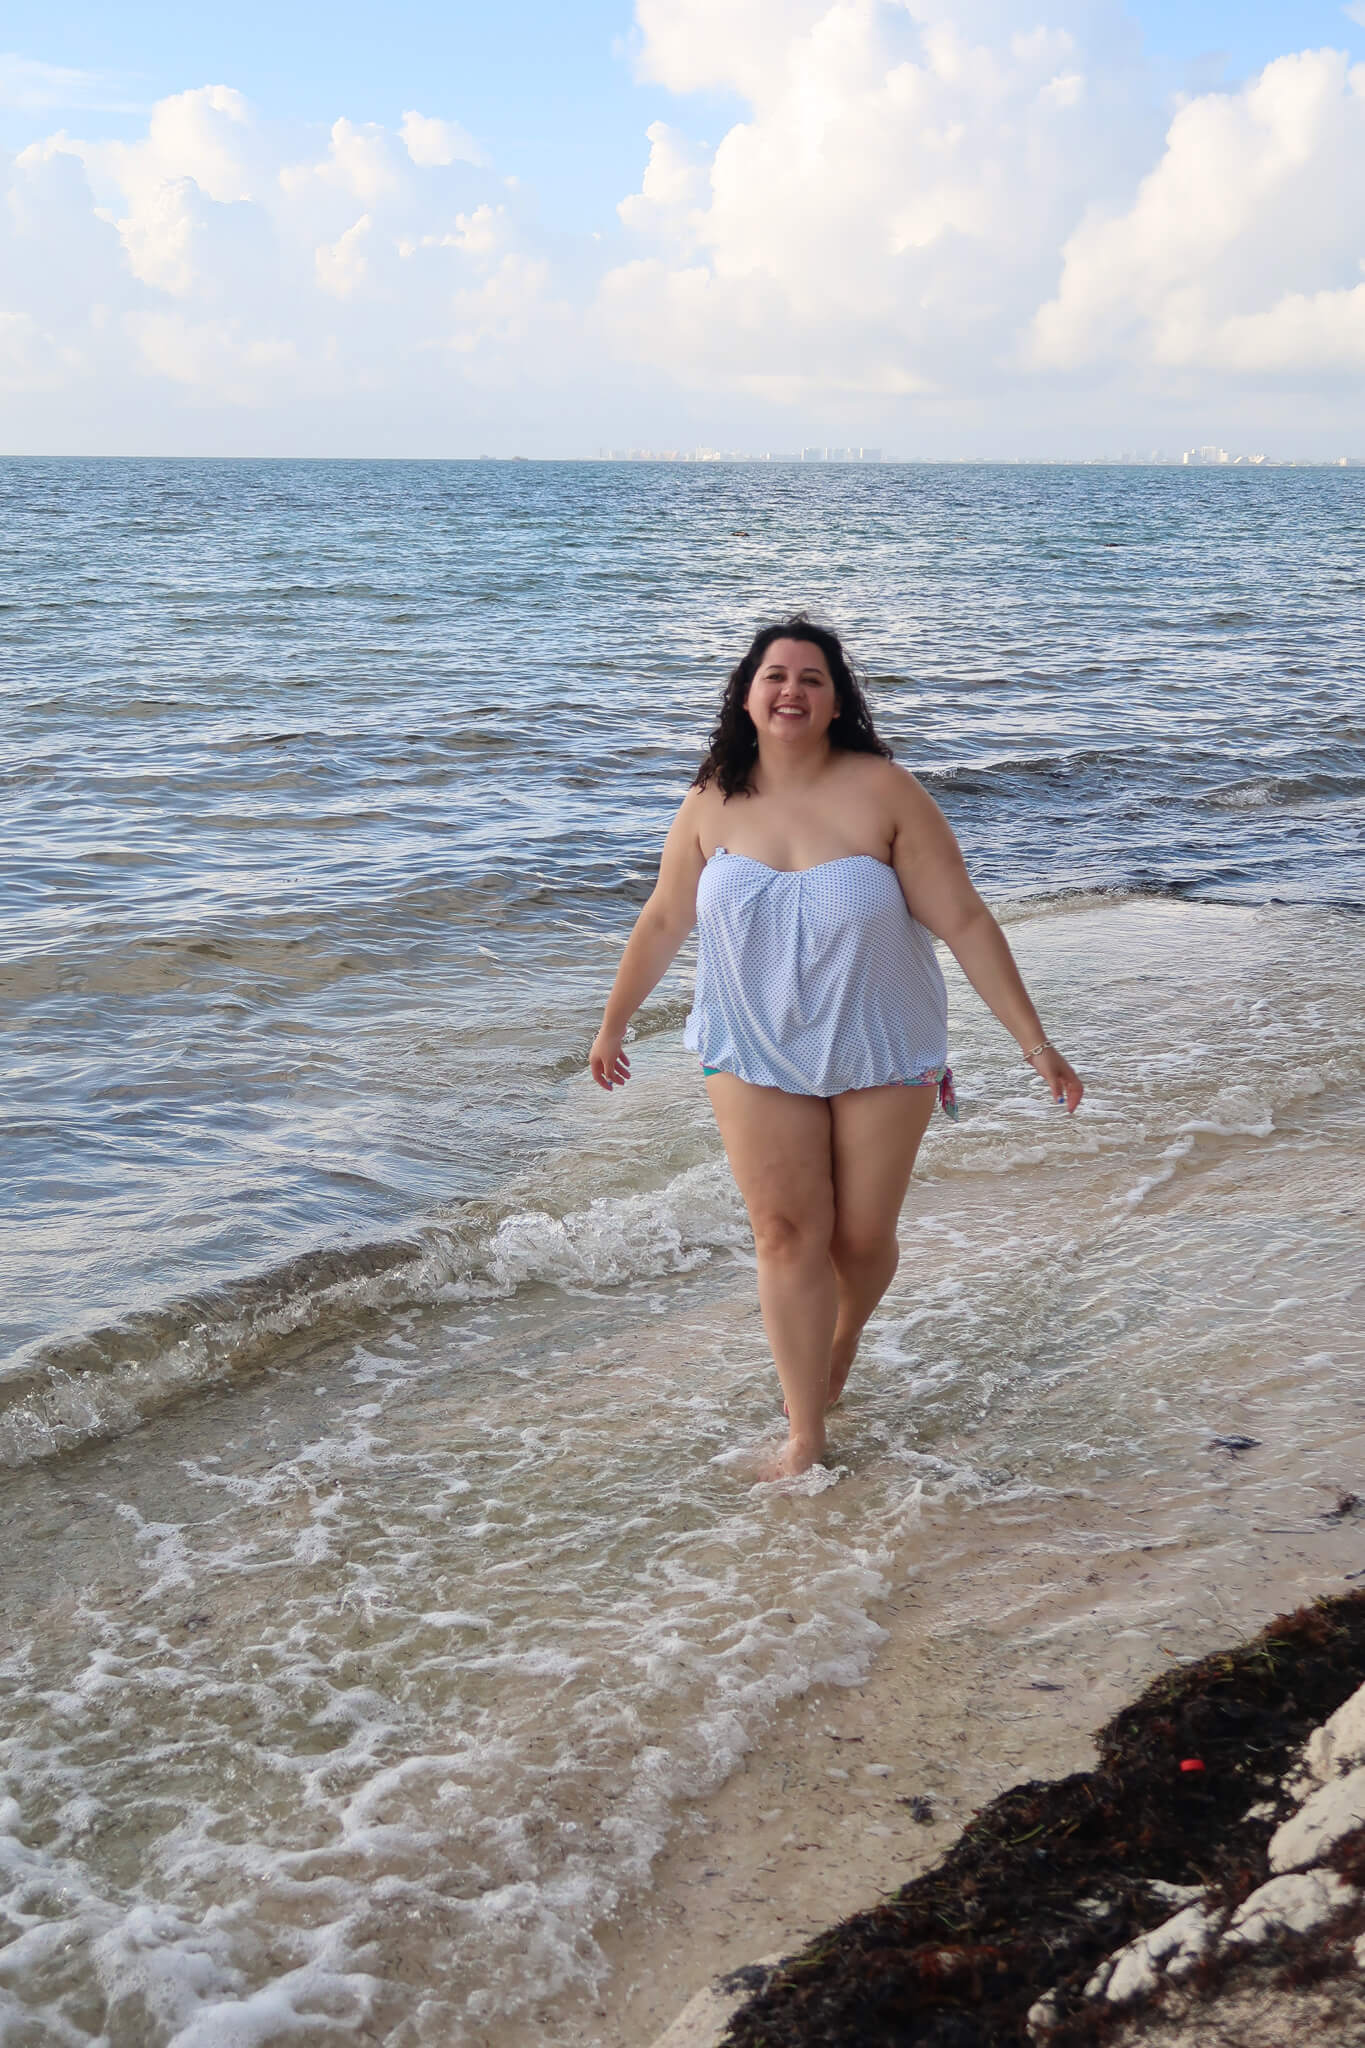 Wearing a plus size tankini on a recent trip to Mexico #BeachILookGood